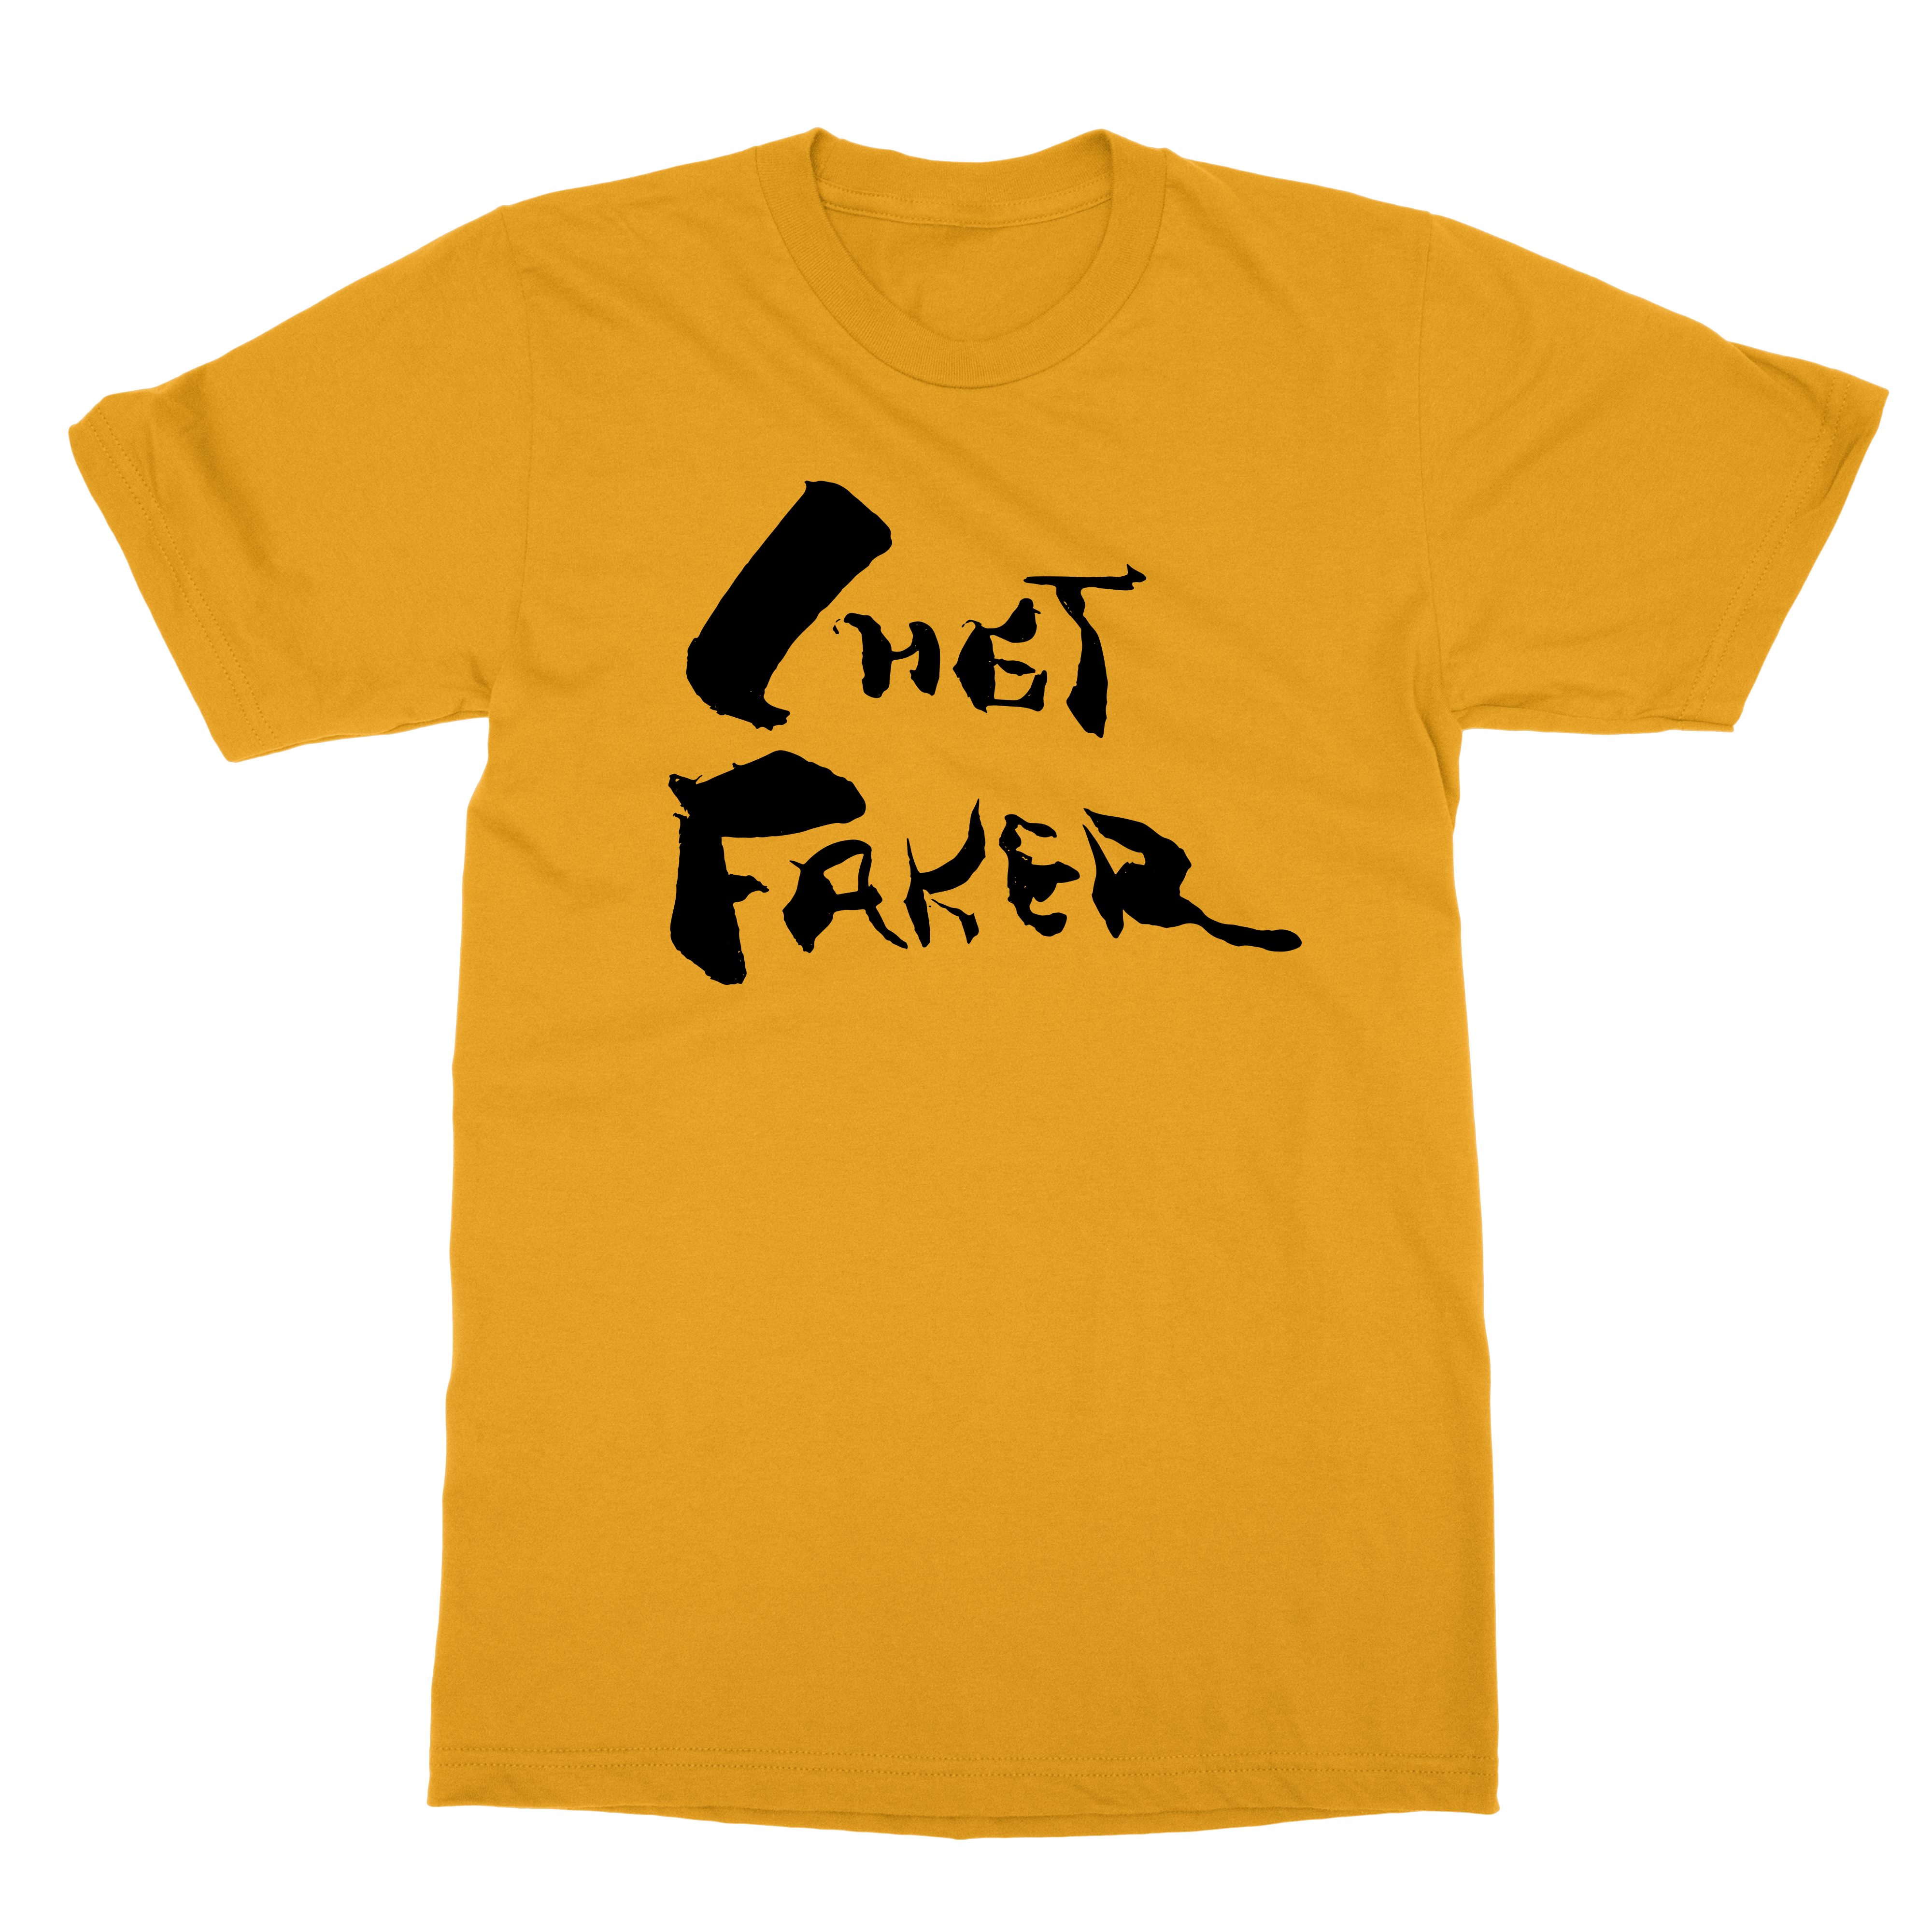 Chet Faker | Logo T-Shirt - Yellow